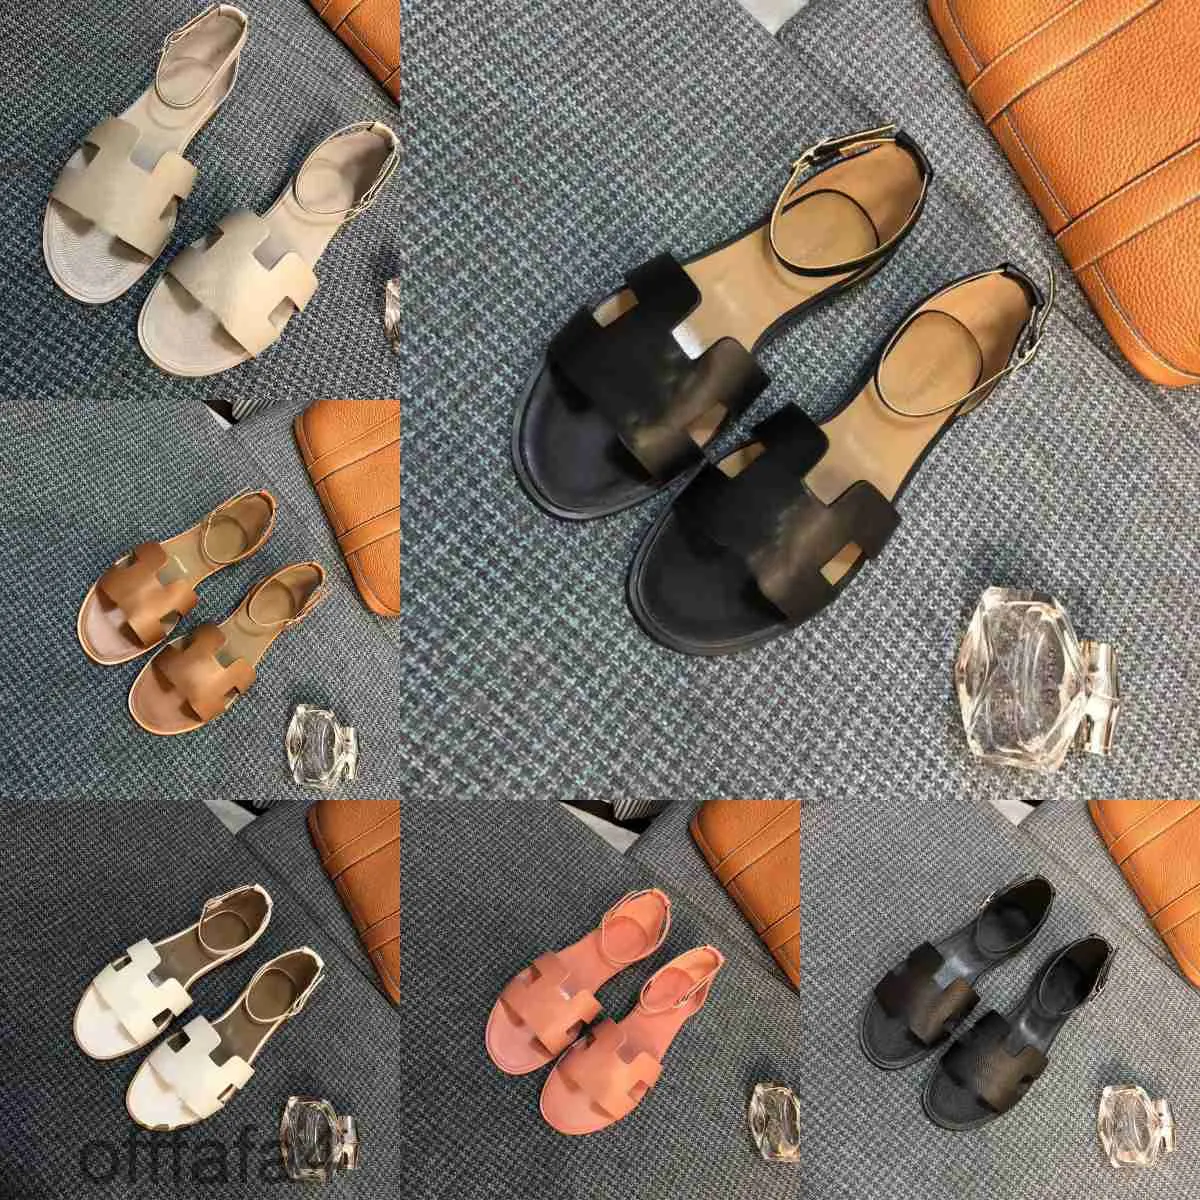 Designer Sandals One Strap Womens Thought Travel Flat Sandals Beach Roman Roman Buse Crineed Sondals Sandals с размером коробки 35-42